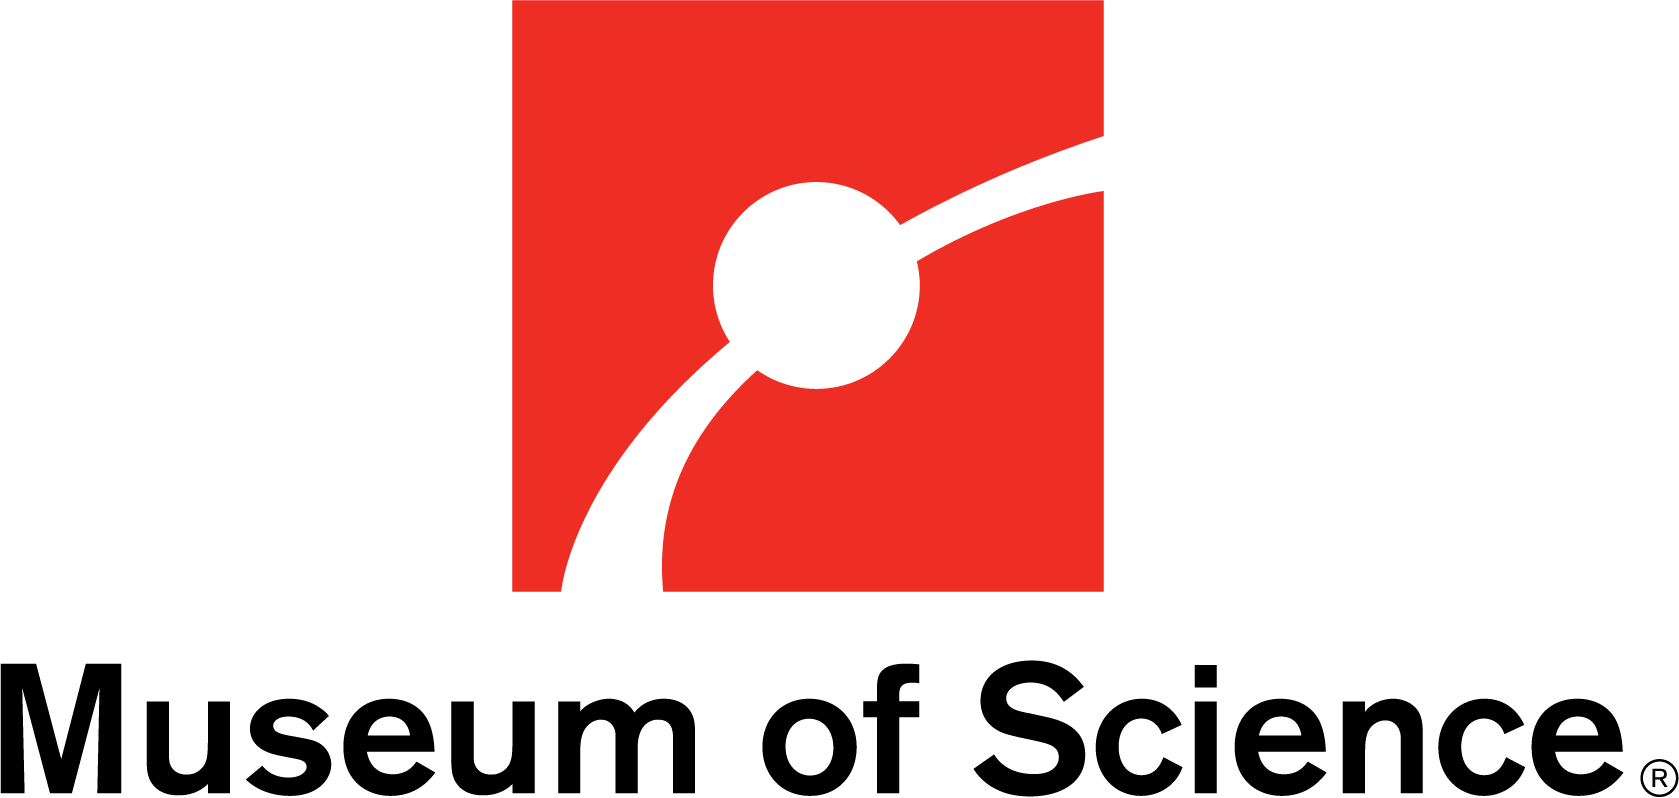 Museum of Science logo